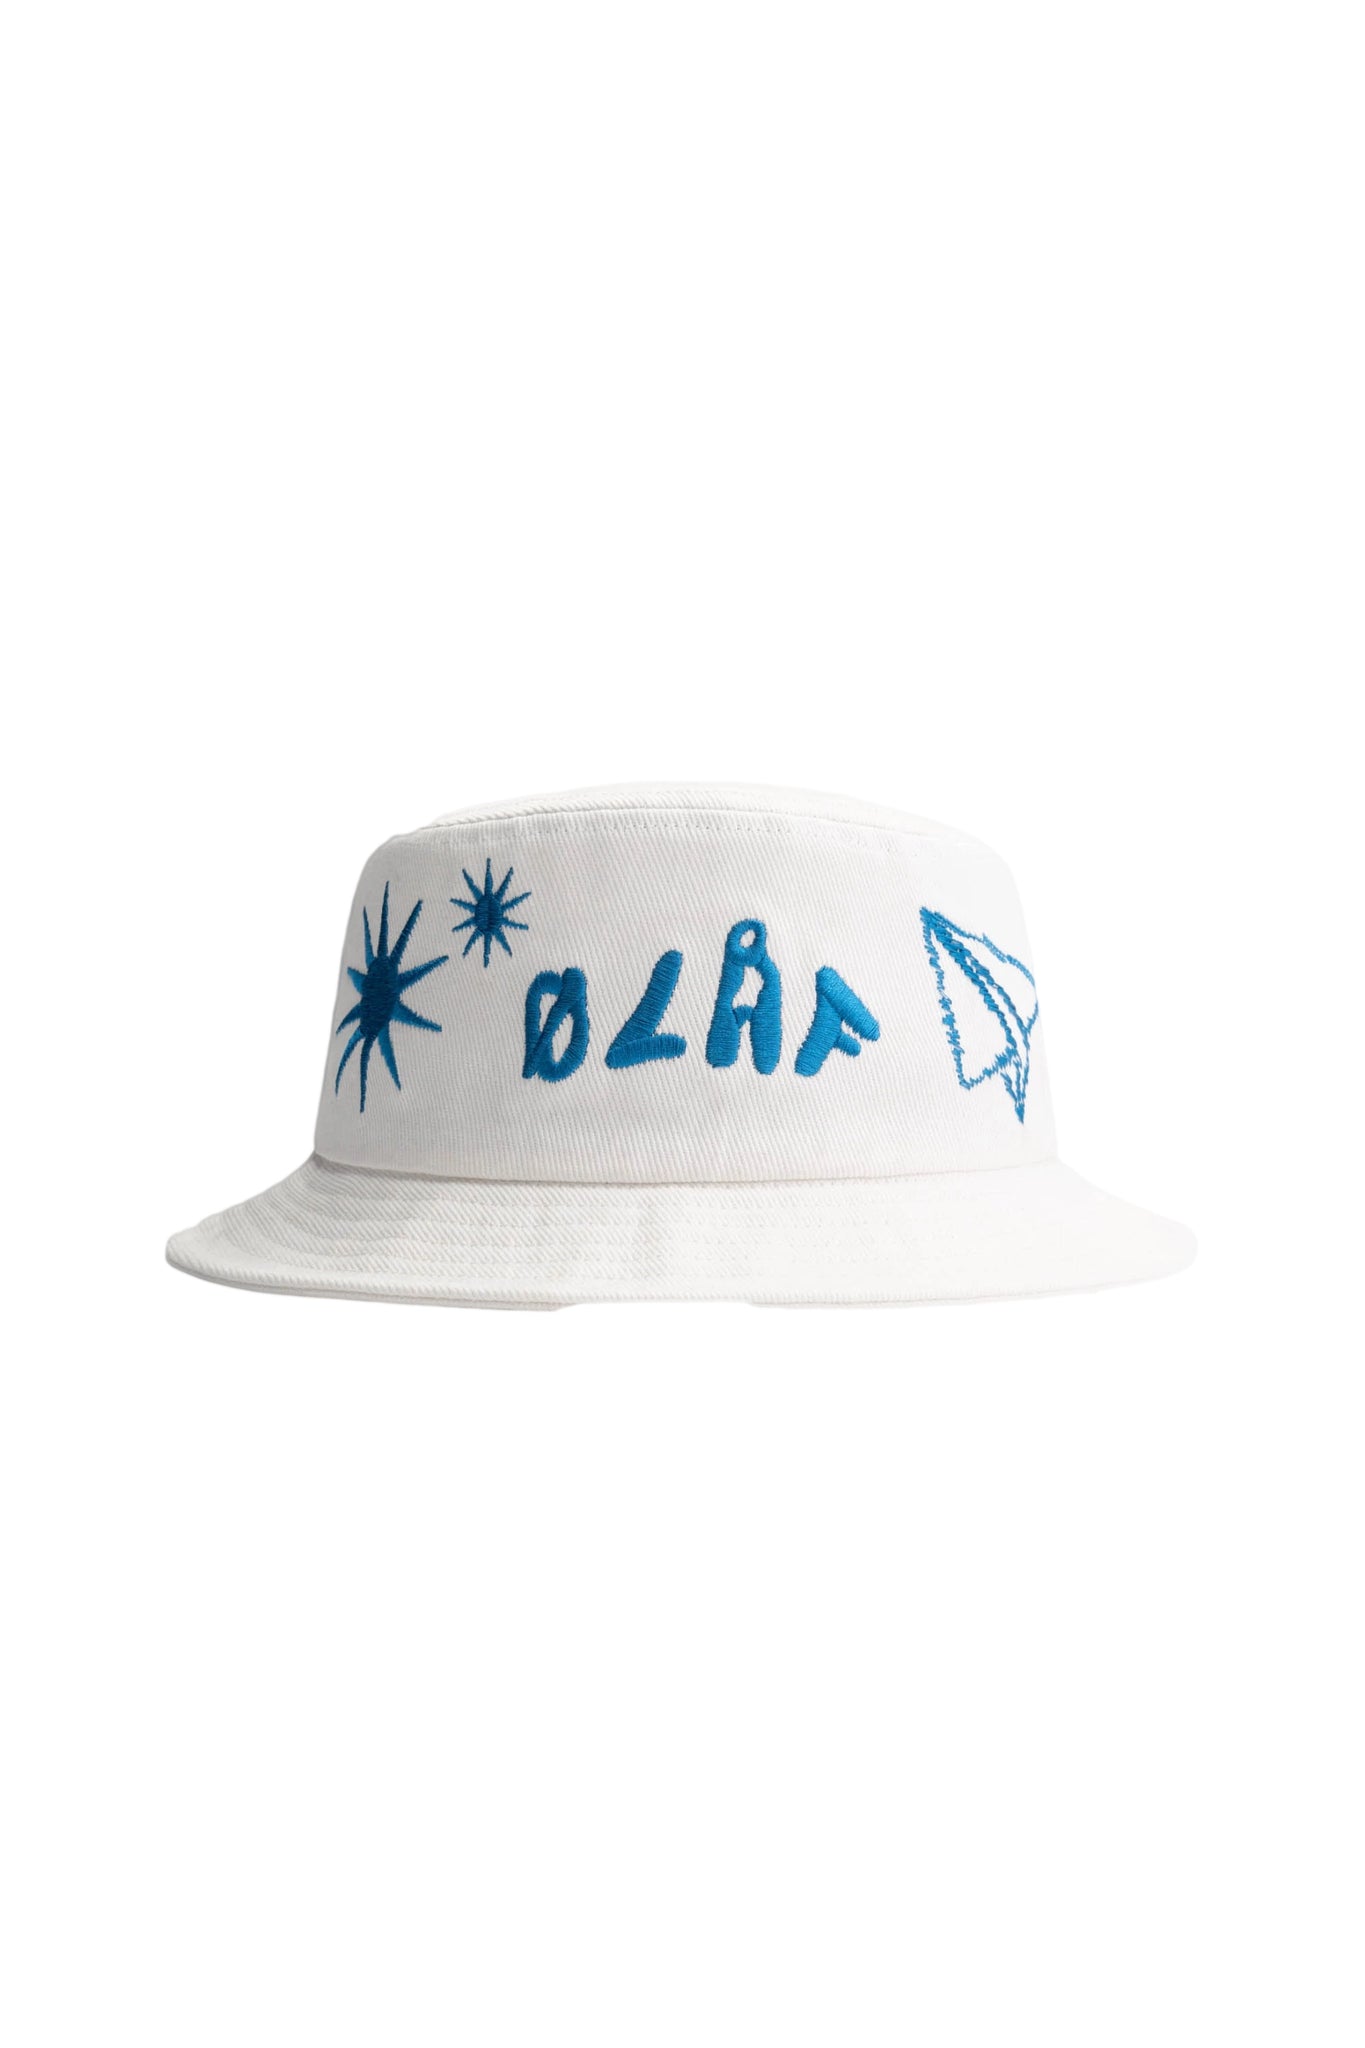 Olaf Friends Bucket Hat, off white